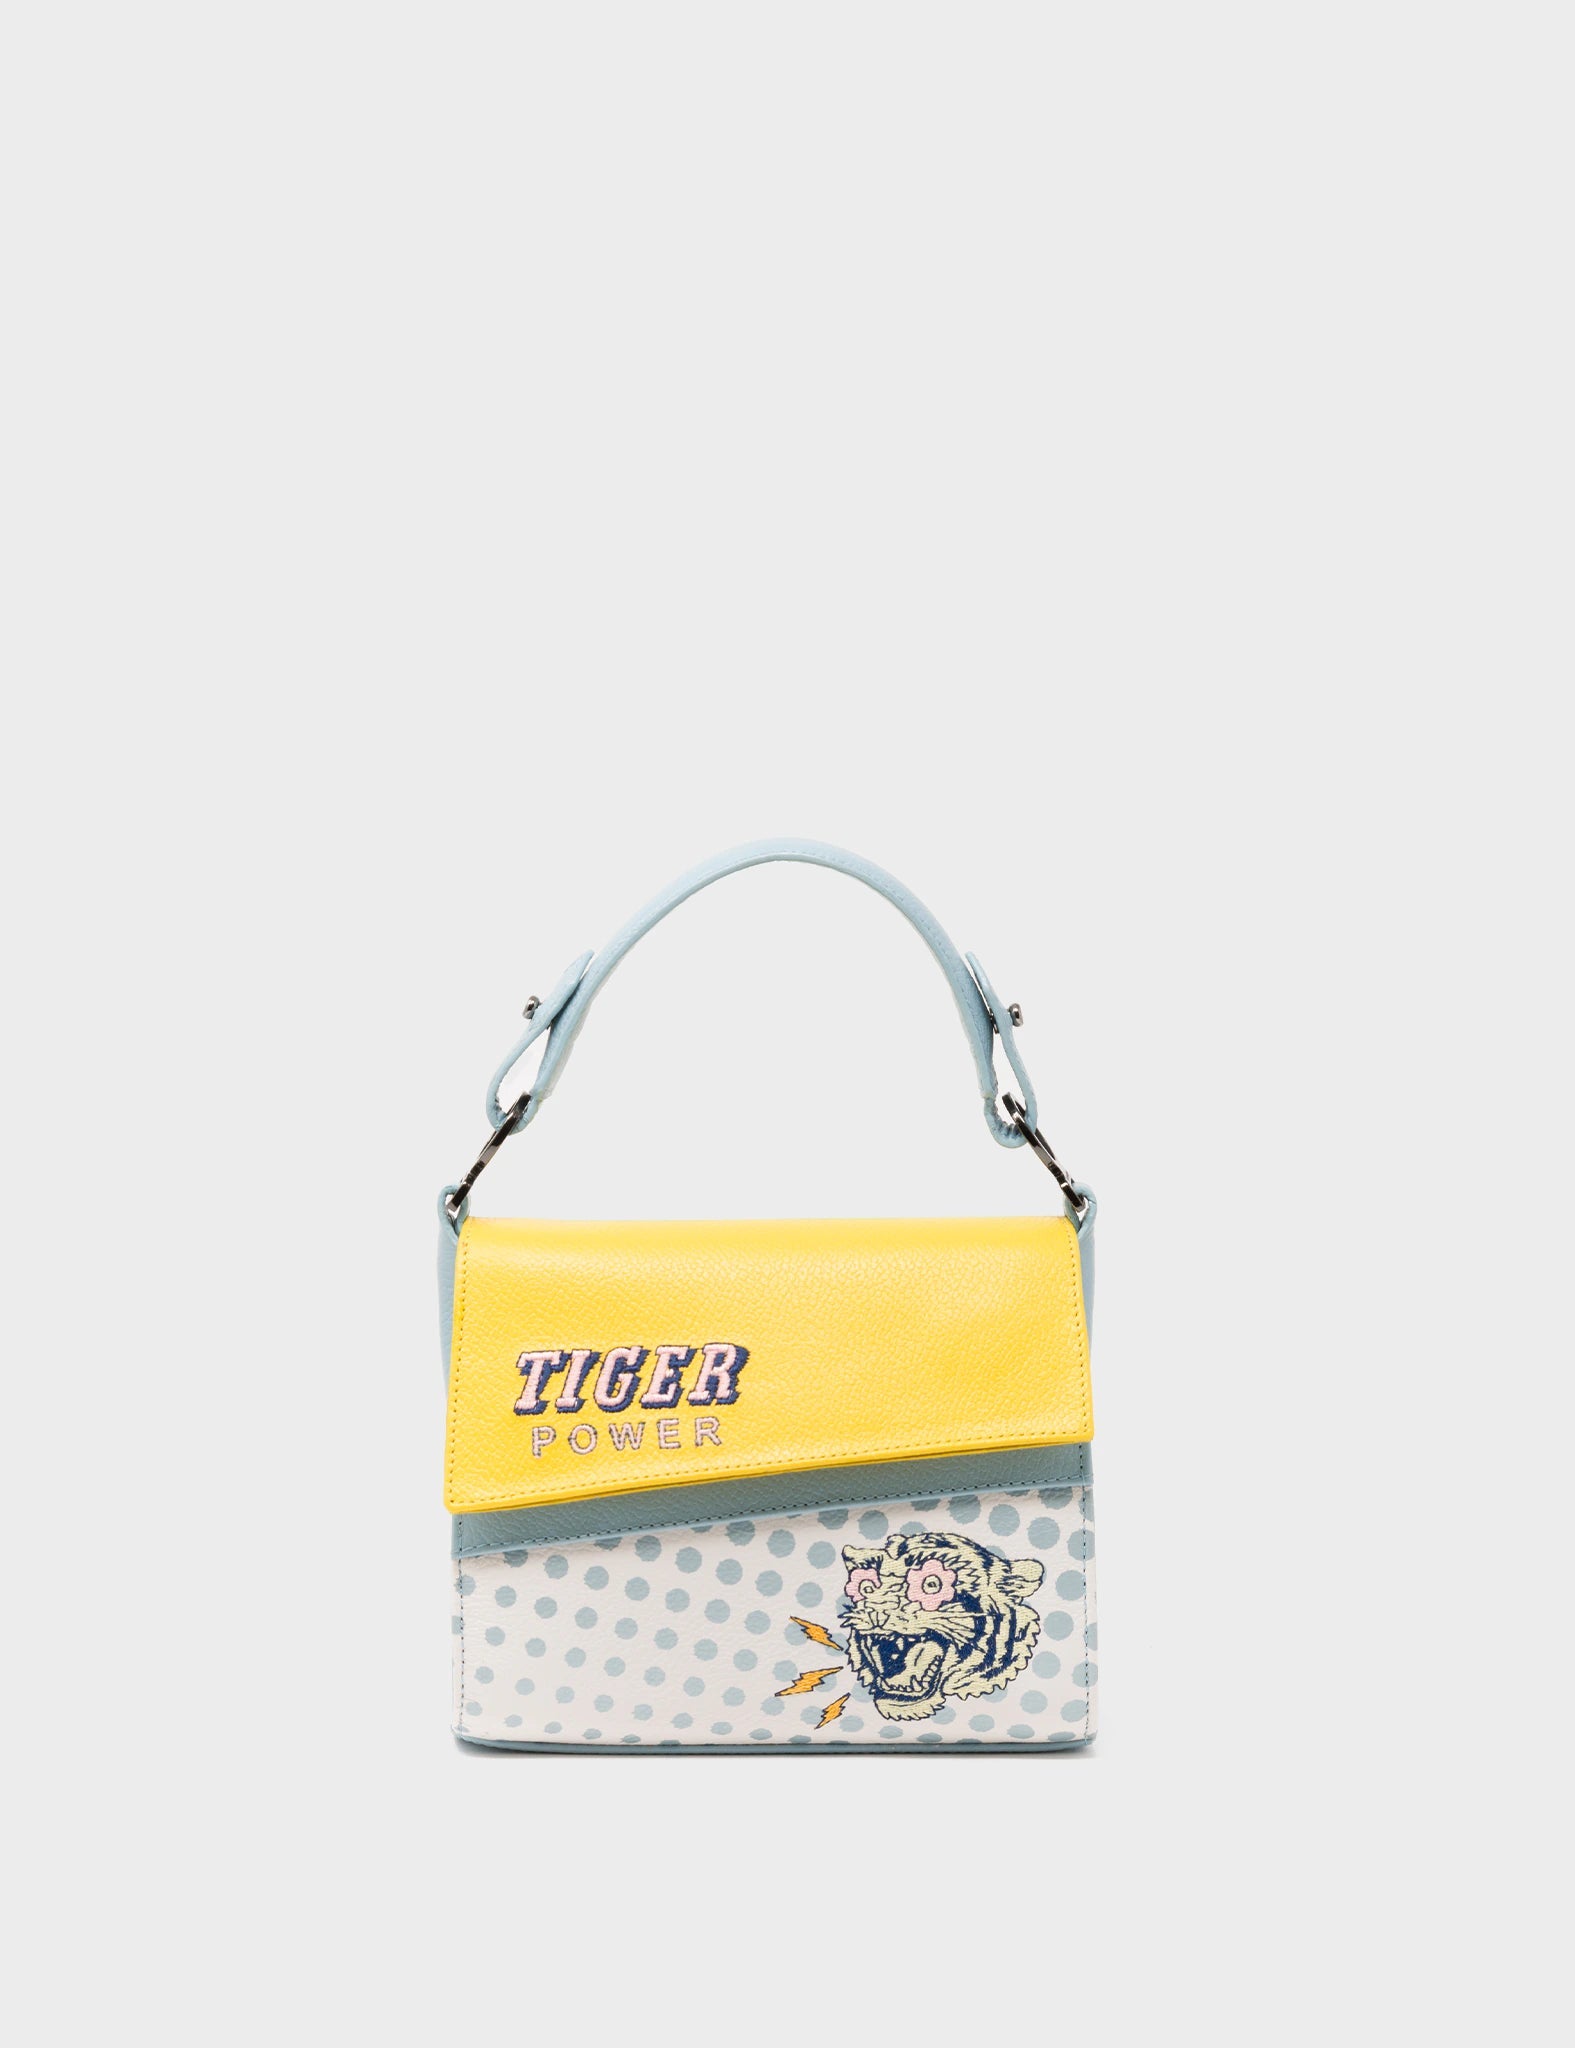 Anastasio Micro Crossbody Handbag Cream and Yellow Leather - Herocity Tiger Power Embroidery - Front view